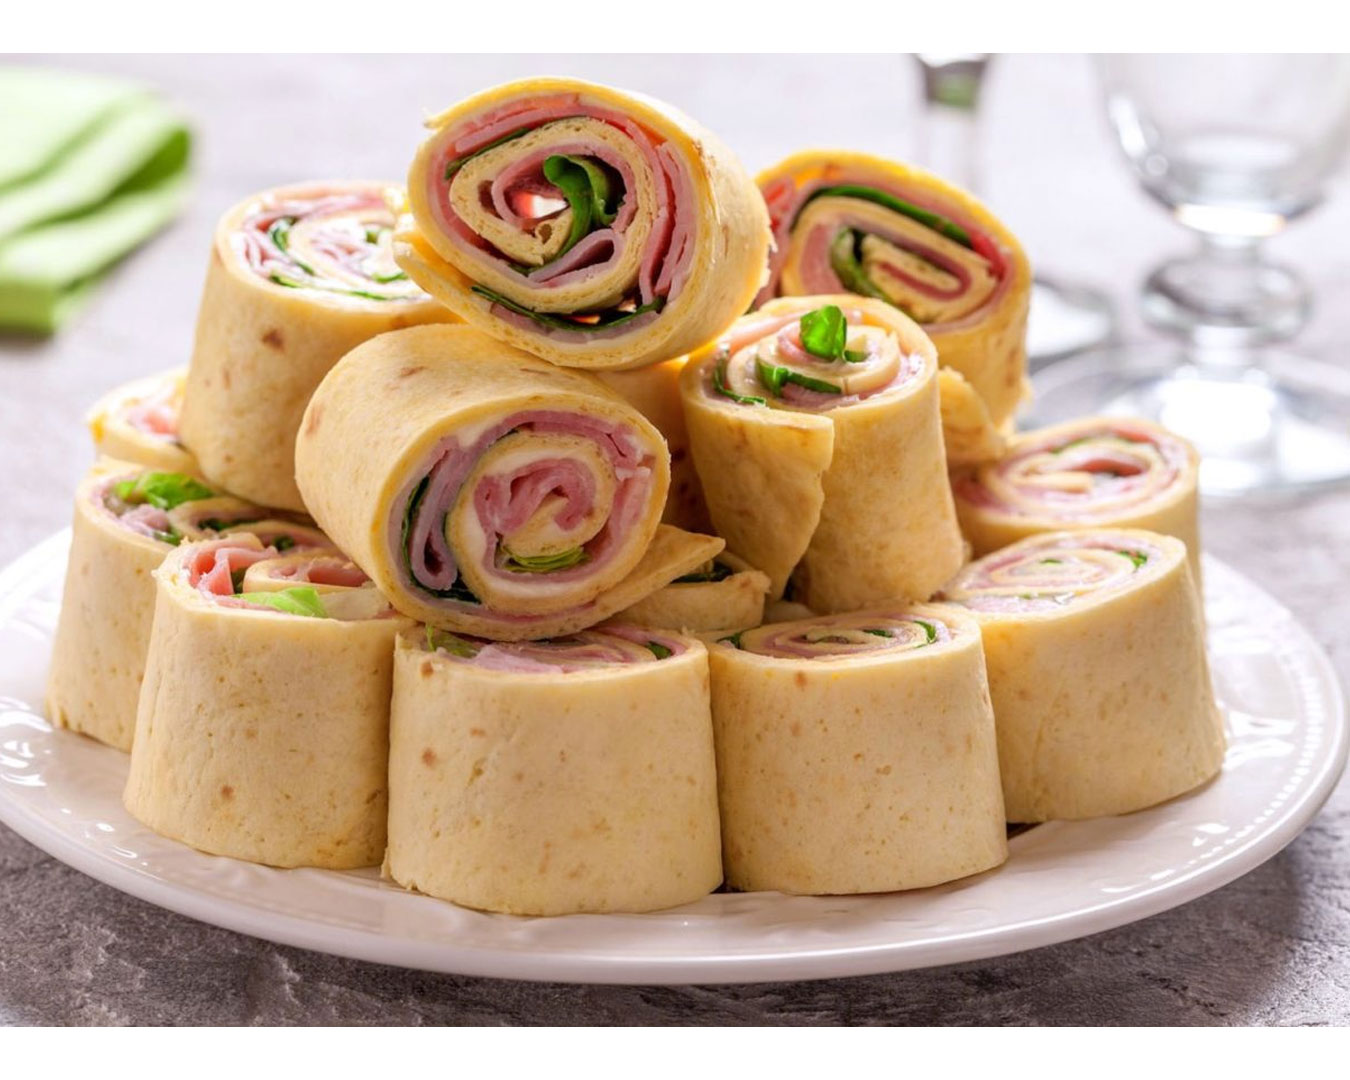 Pinwheel Sandwiches